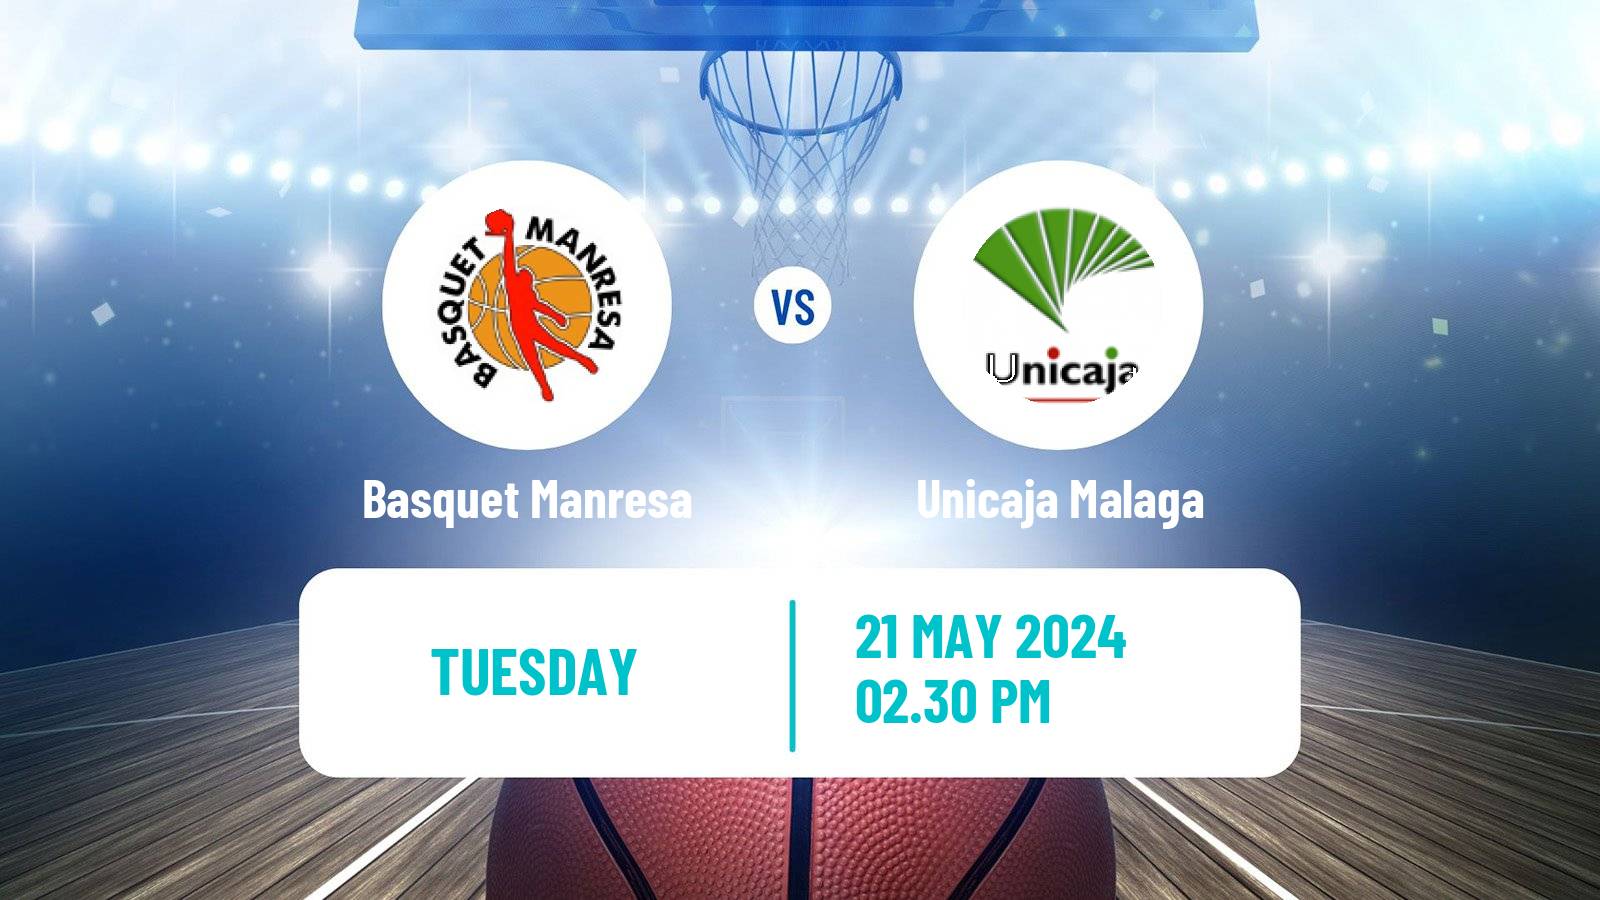 Basketball Spanish ACB League Basquet Manresa - Unicaja Malaga